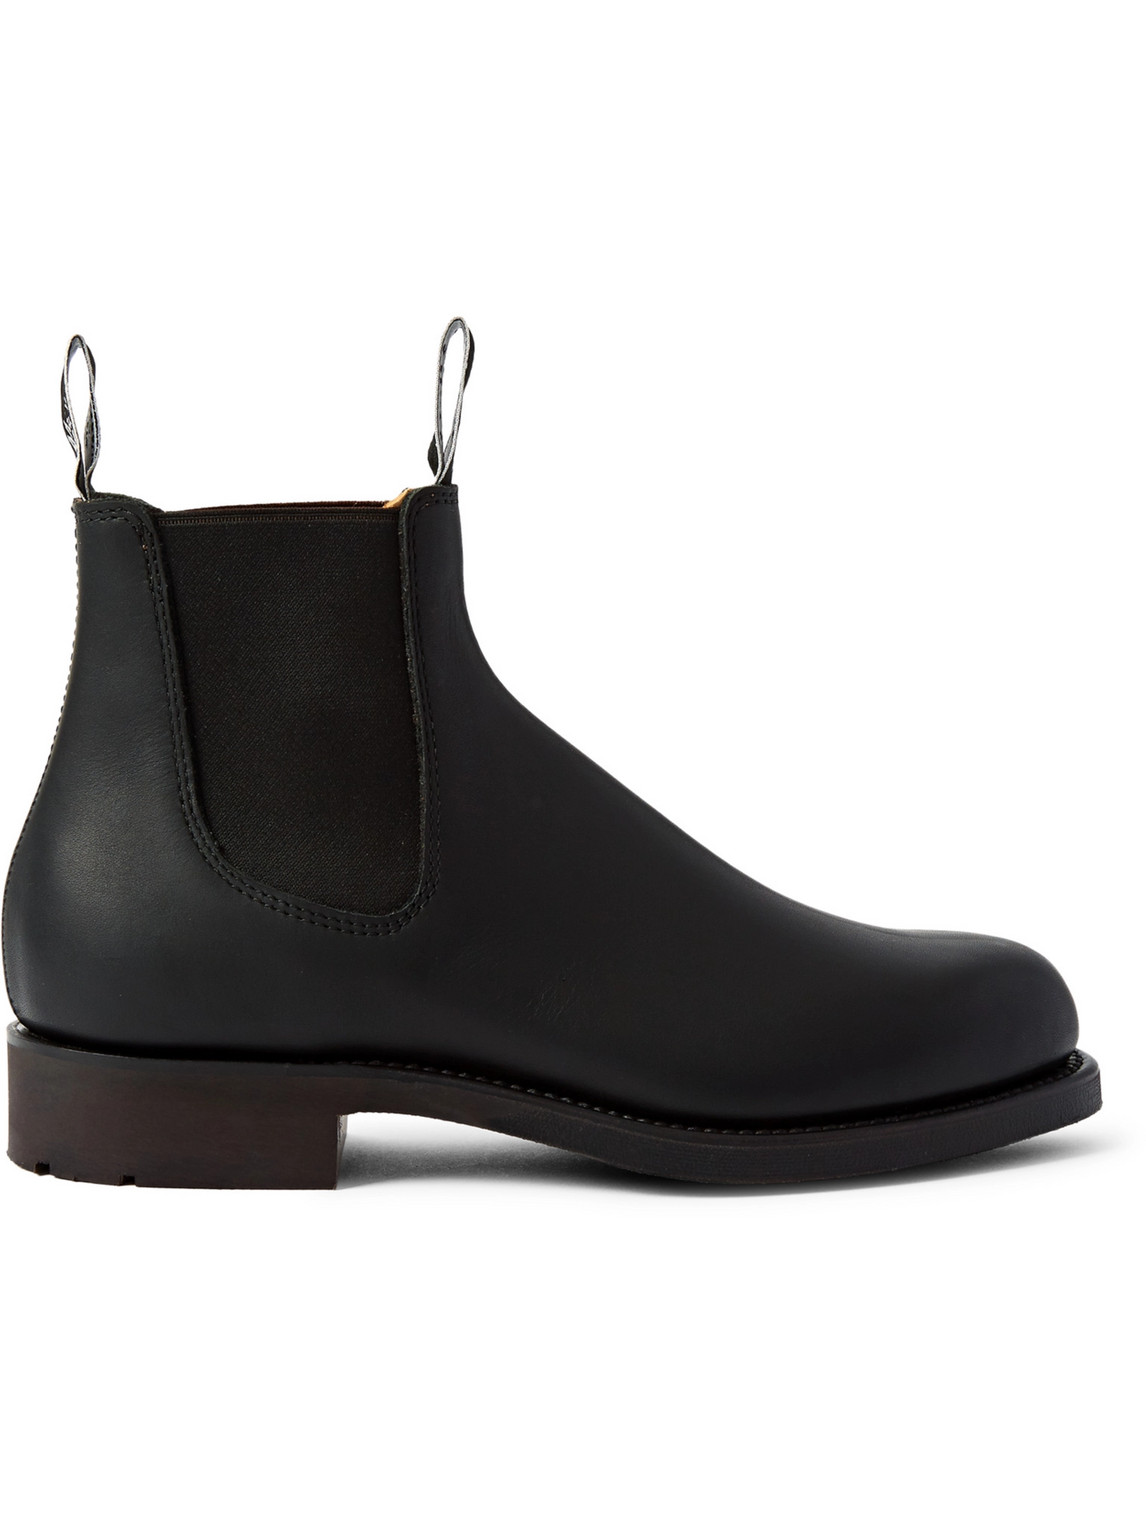 Gucci - Bonny Webbing-Trimmed Leather Chelsea Boots - Men - Black Gucci